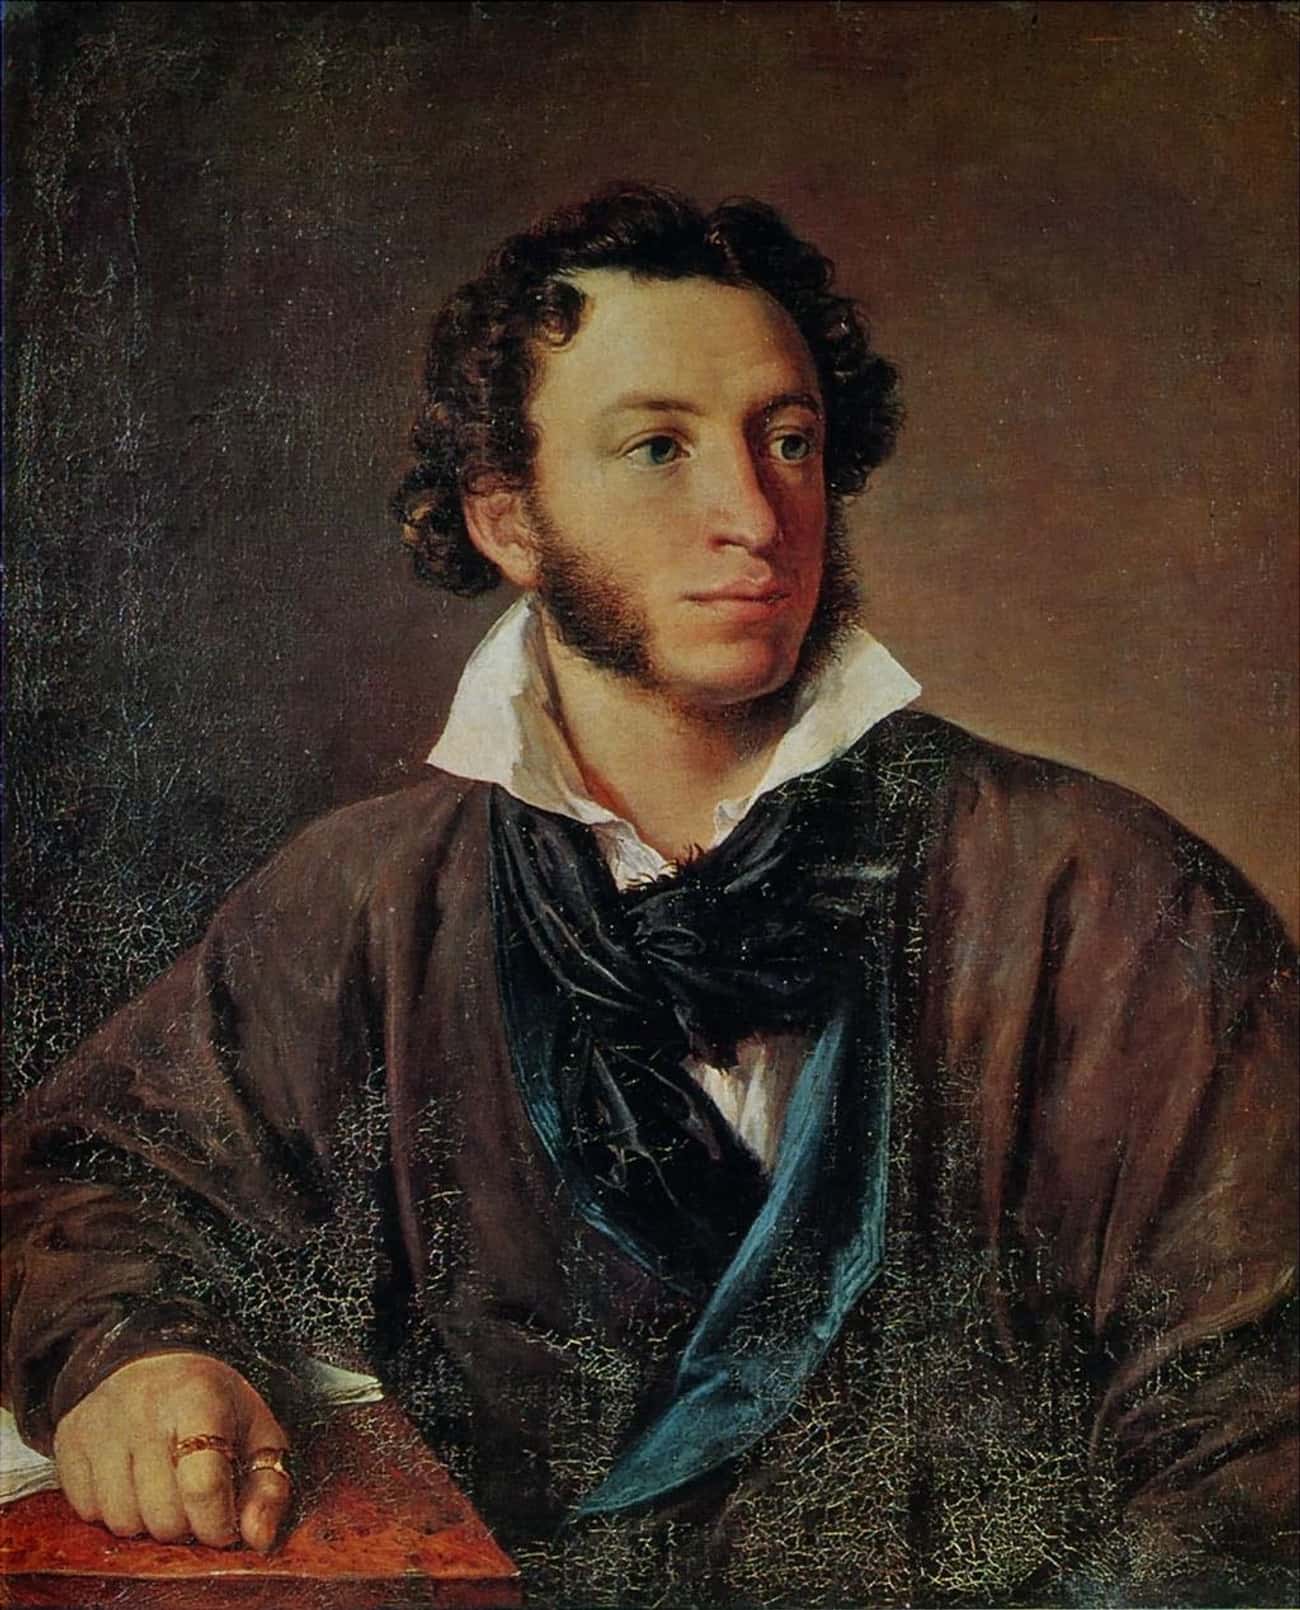 Aleksandr Pushkin